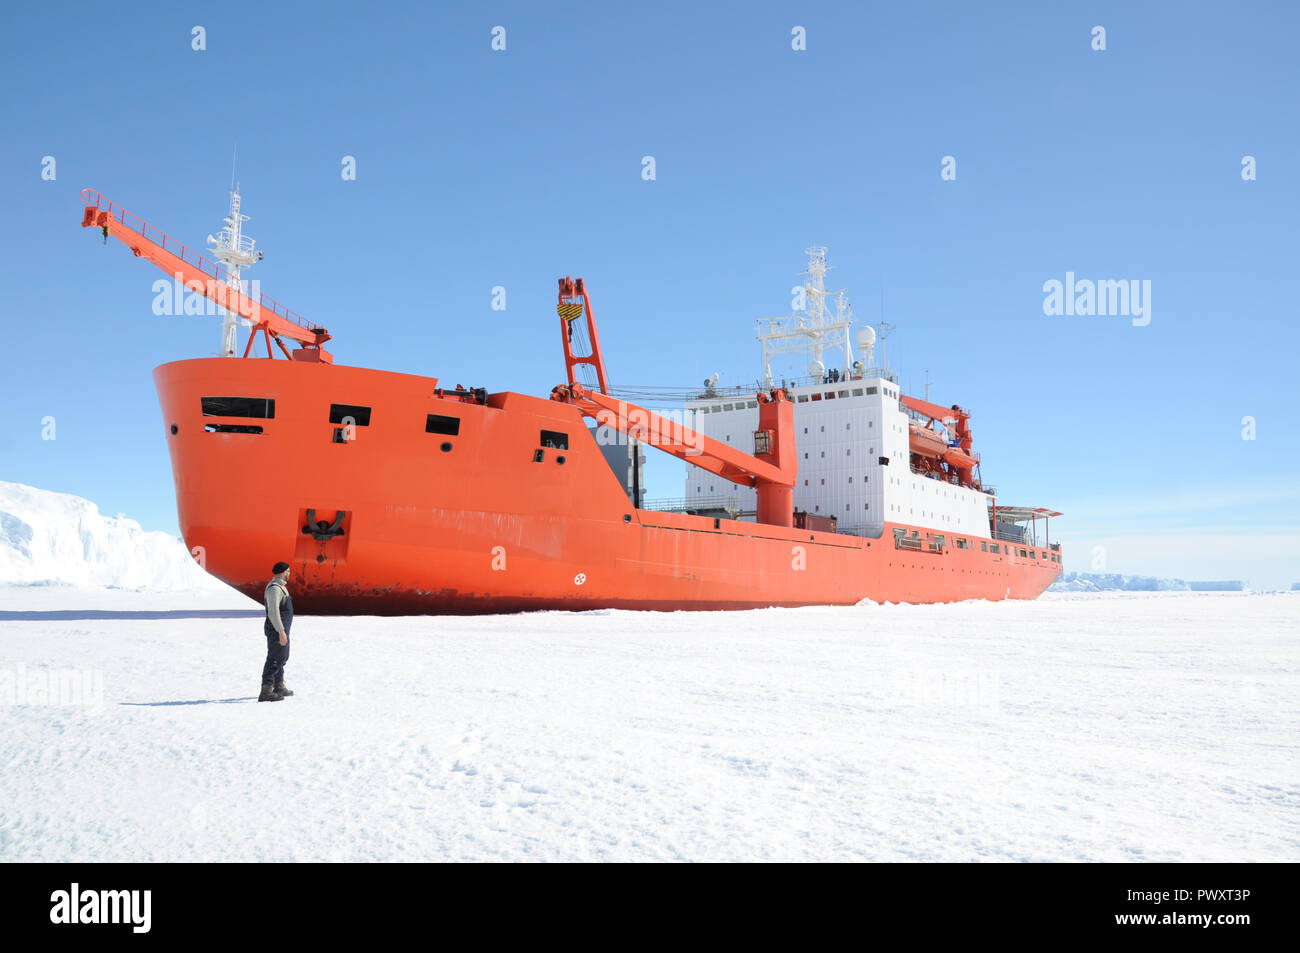 Progress station, Antarctica, January 10, 2017: The cargo ship costs at the floe under unloading. Antarctic. Stock Photo